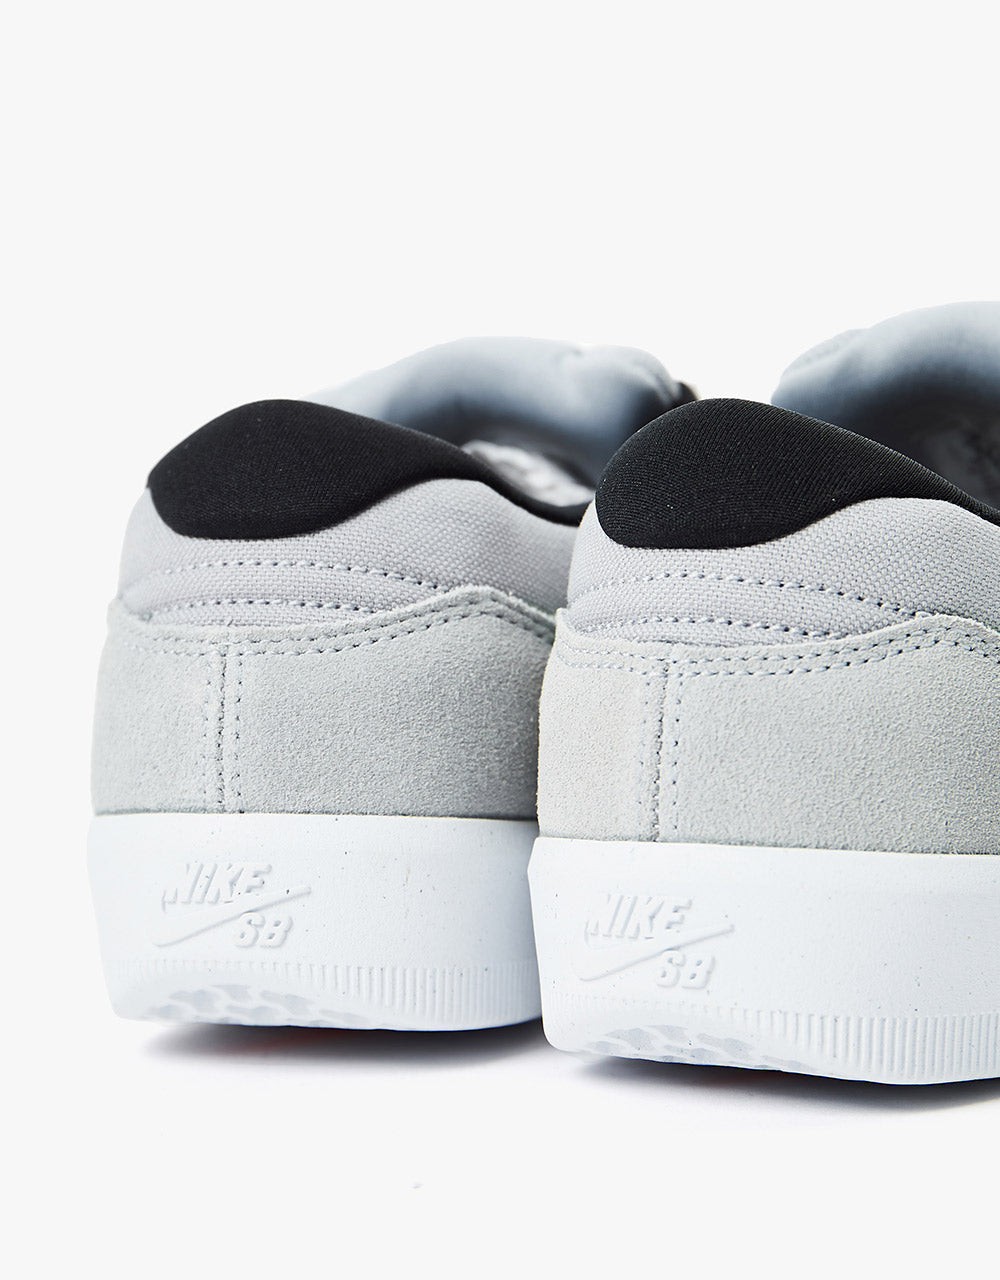 Nike SB Force 58 Skate Shoes - Wolf Grey/Light Menta-Black-Wolf Grey